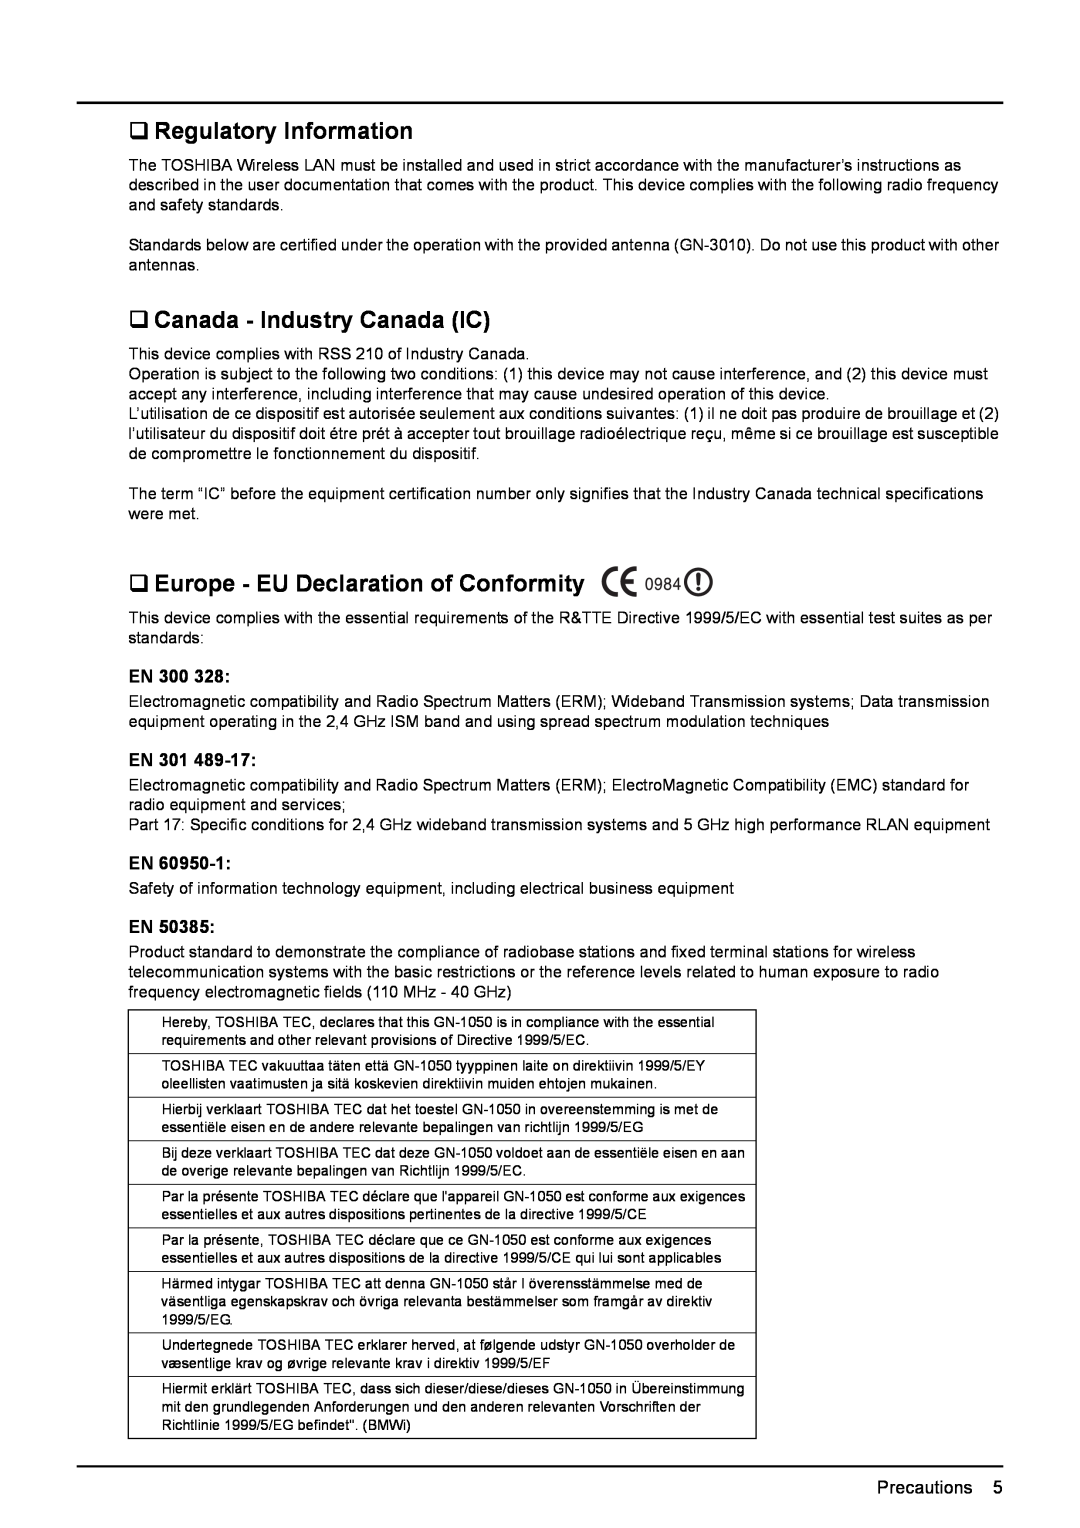 Toshiba GN-1050 manual ‰ Regulatory Information, ‰ Canada - Industry Canada IC, ‰ Europe - EU Declaration of Conformity 